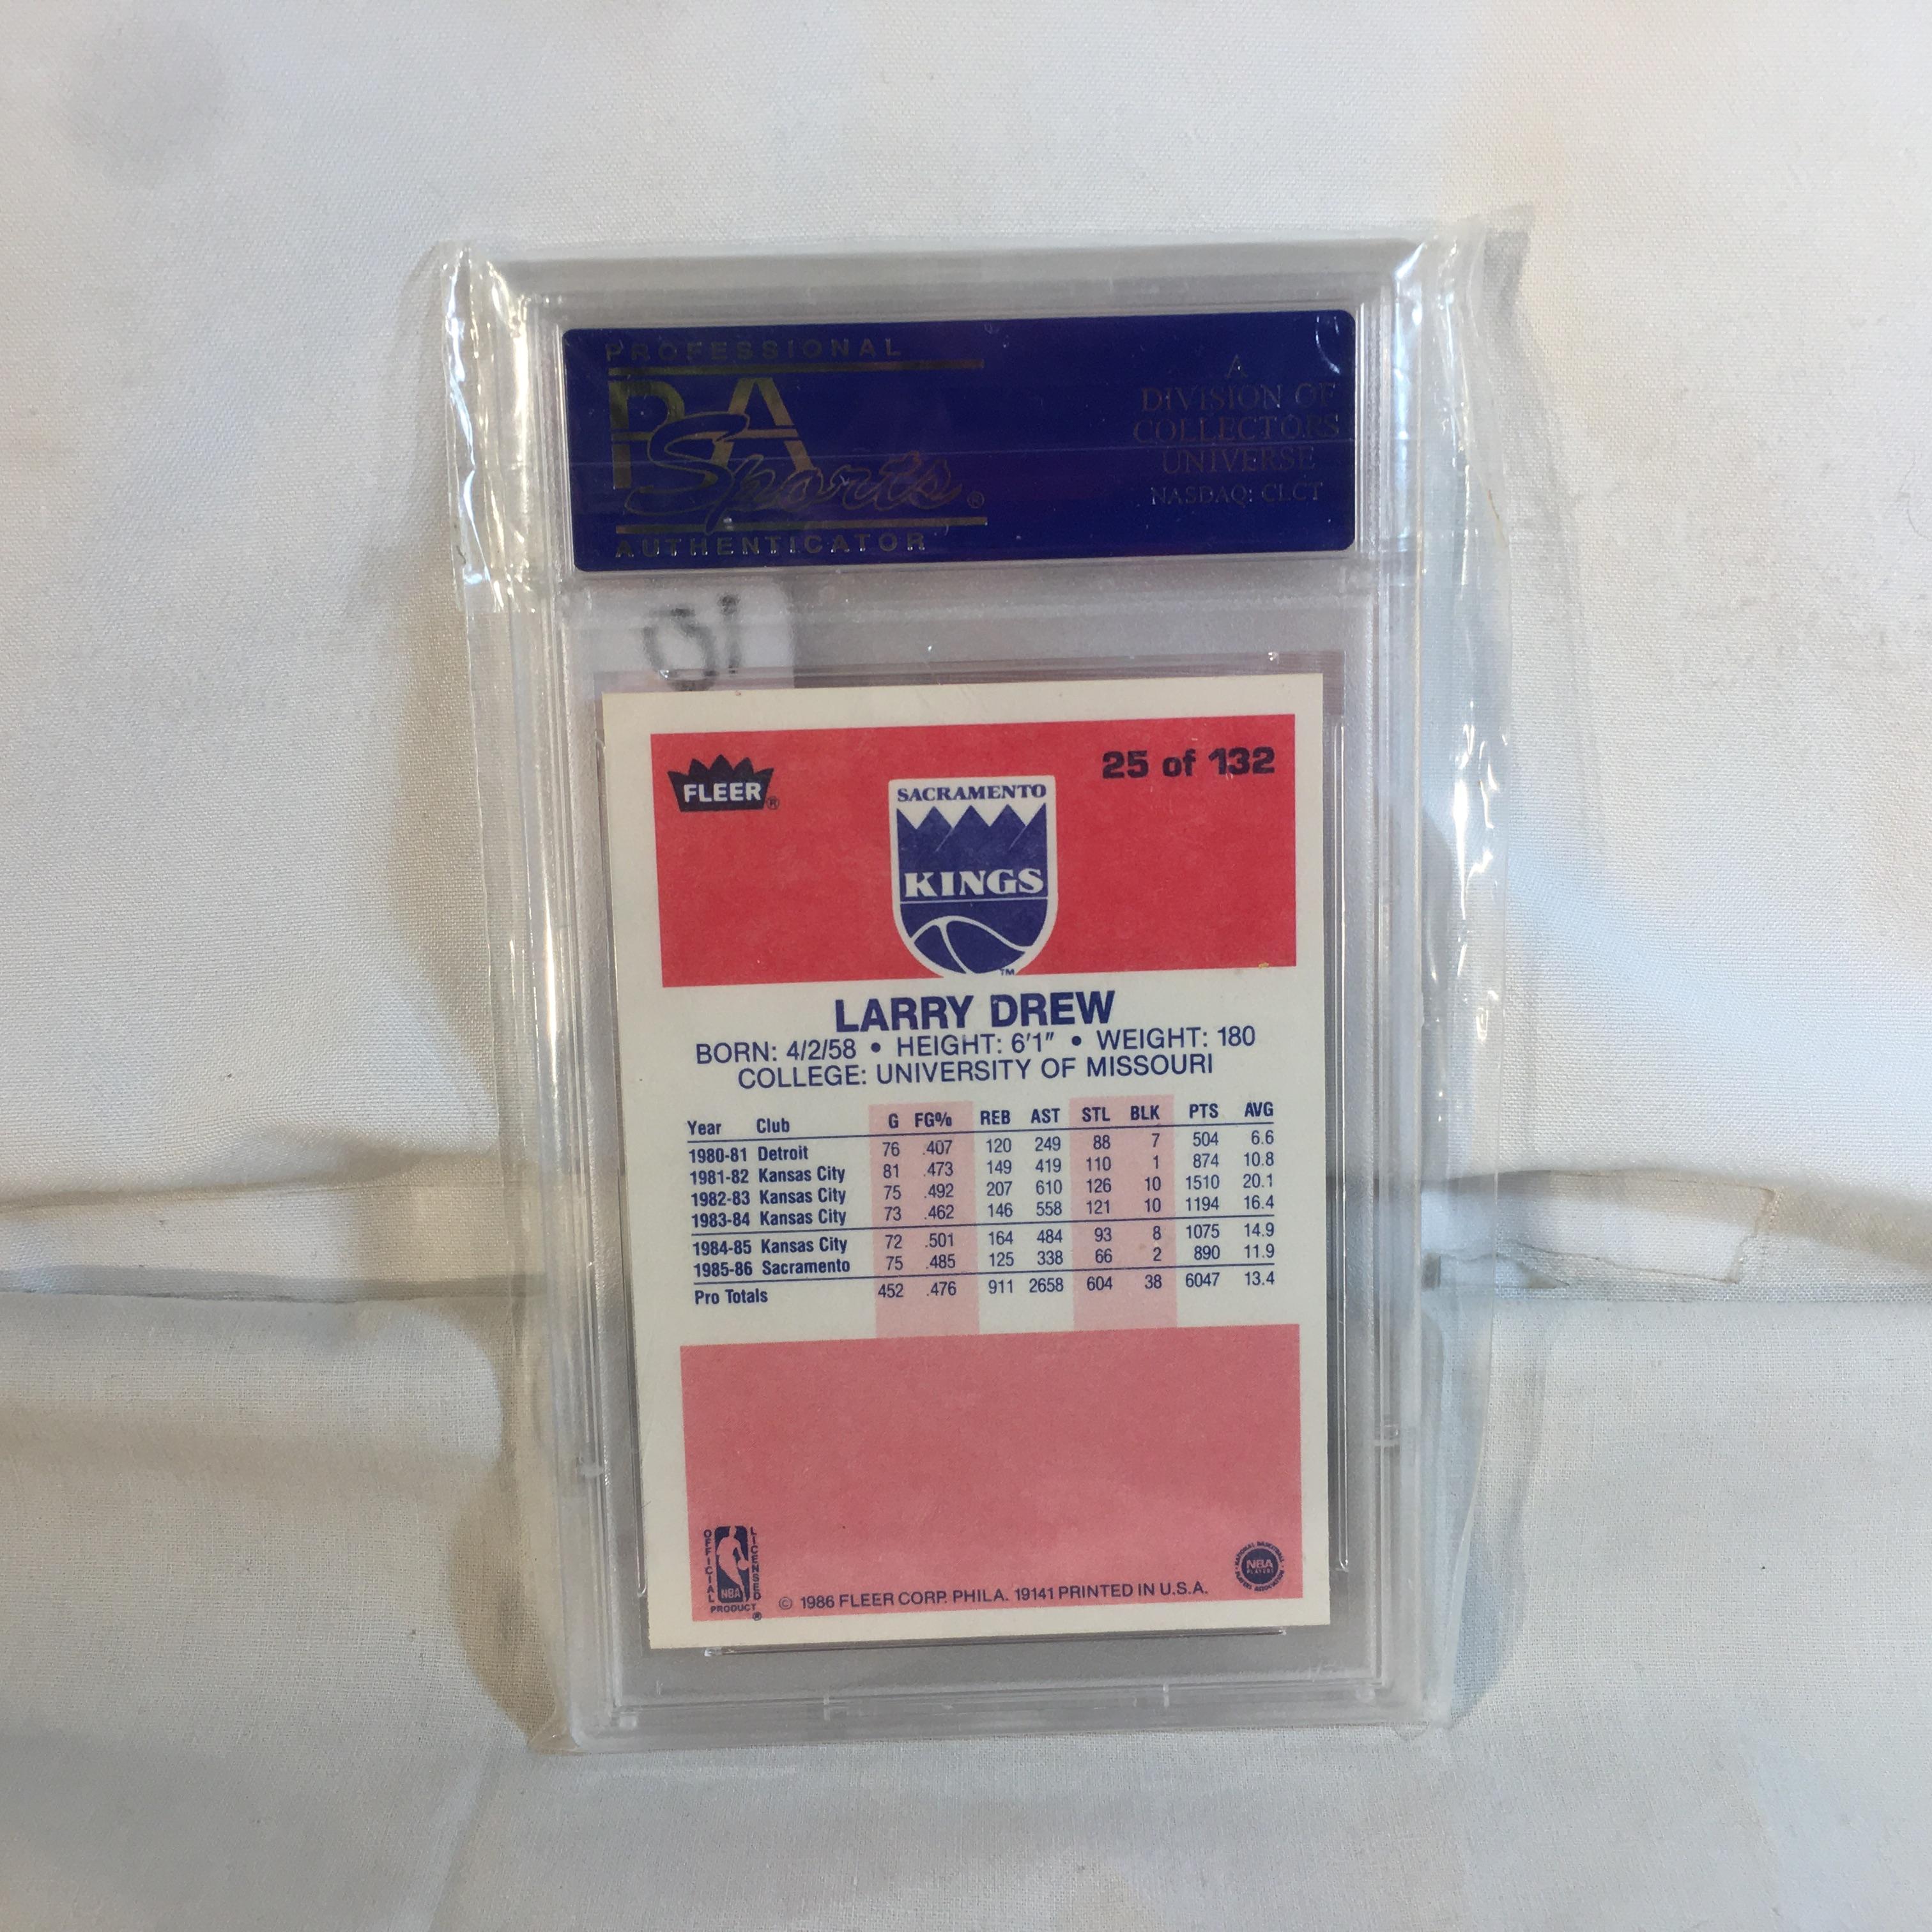 Collector Vintage PSA Graded 1986 Fleer #25 Larry Drew Mint 9 30795842 NBA Sports Card